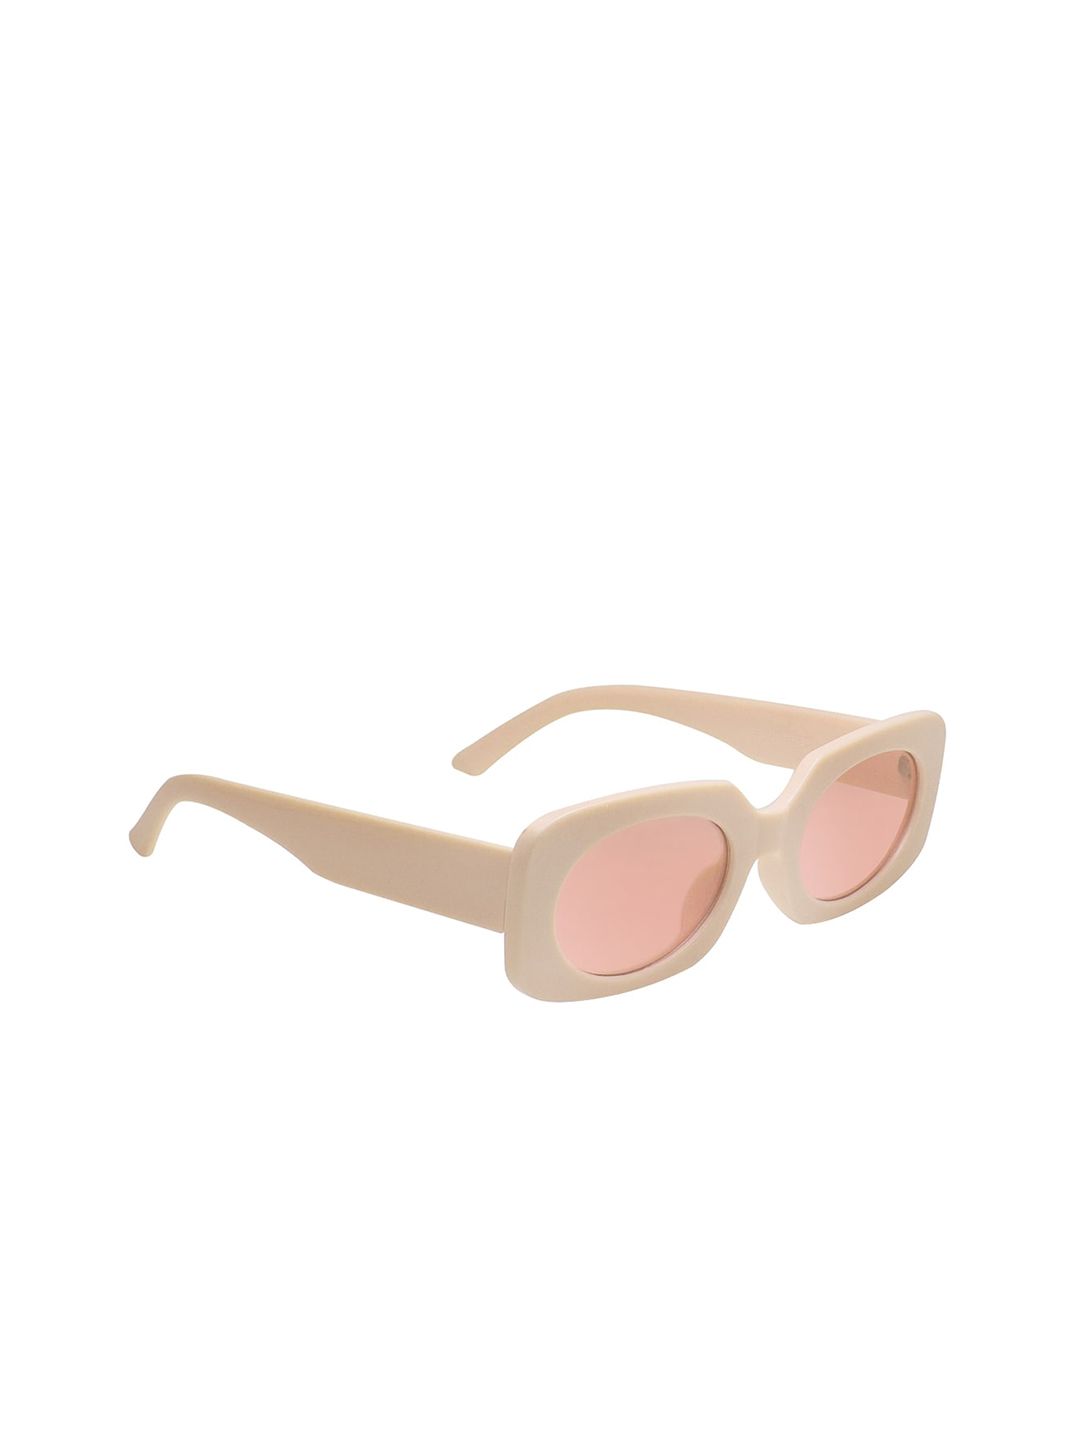 Peter Jones Eyewear Unisex Lens Rectangle Sunglasses with UV Protected Lens